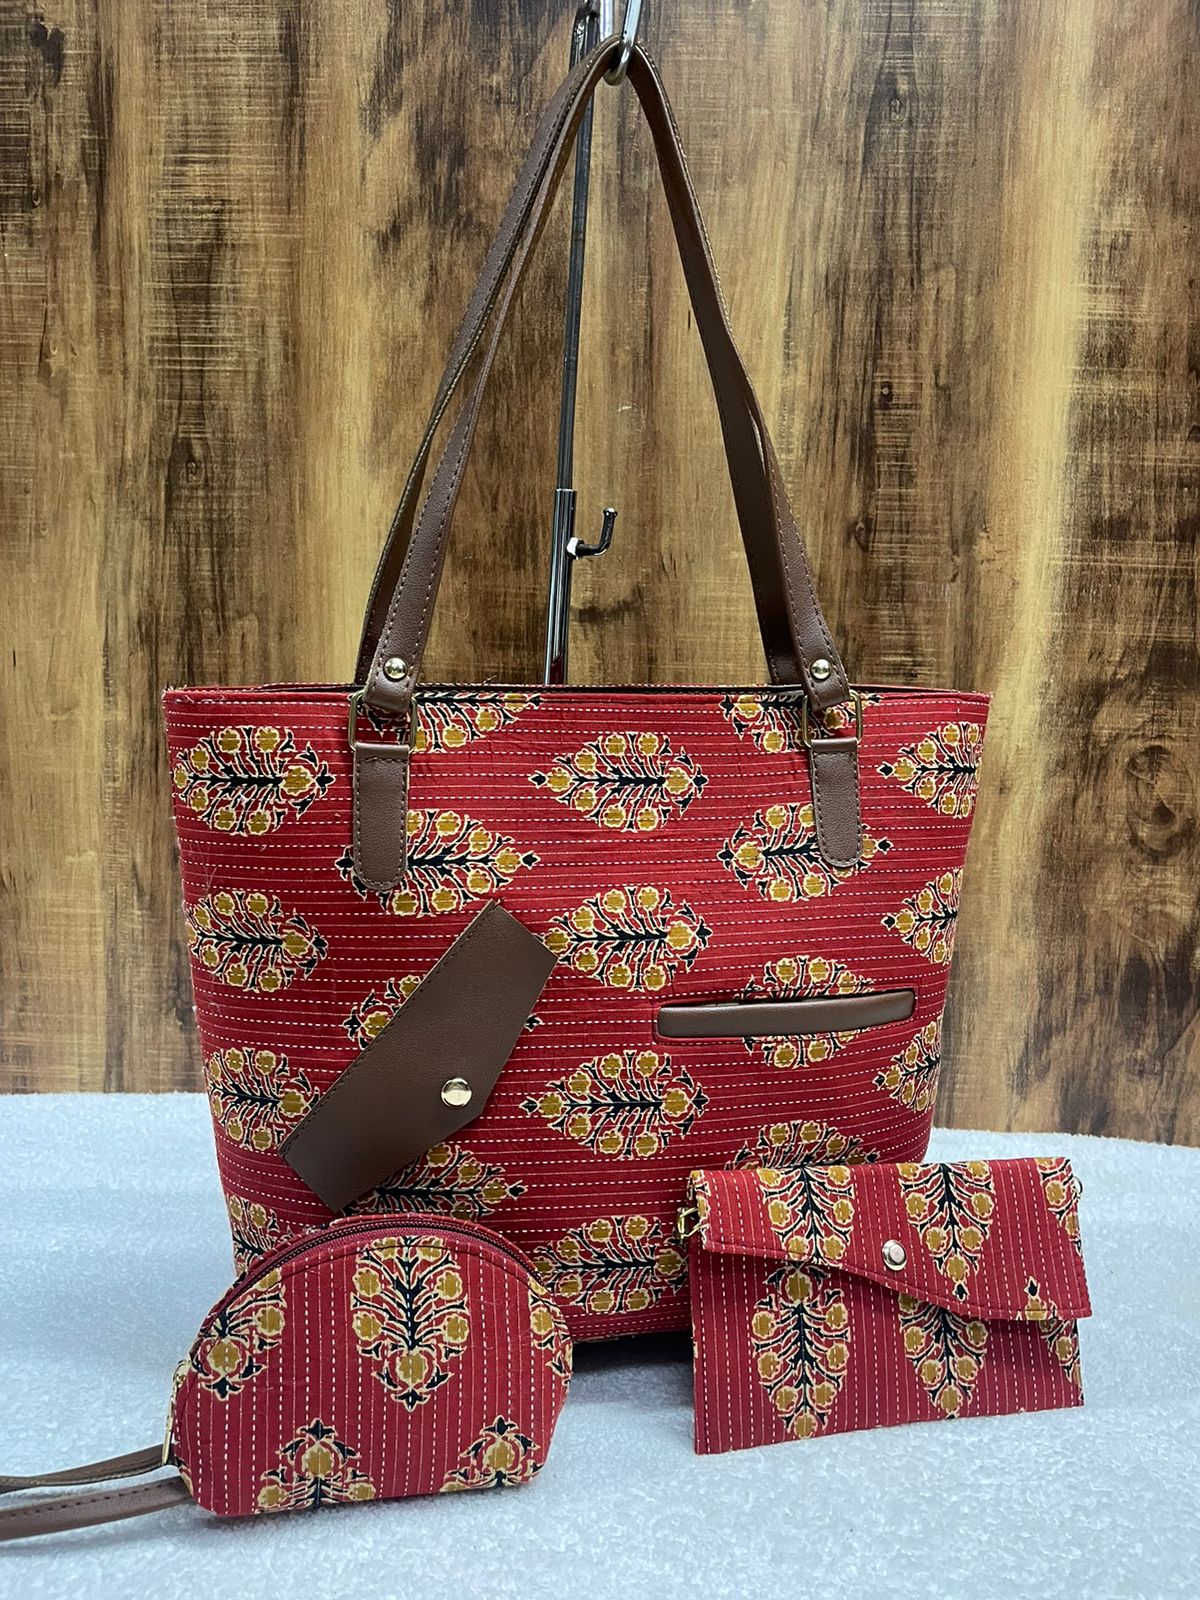 Danielle Nicole Pink Combo Reese Mini Satchel Handbag Purse New | eBay